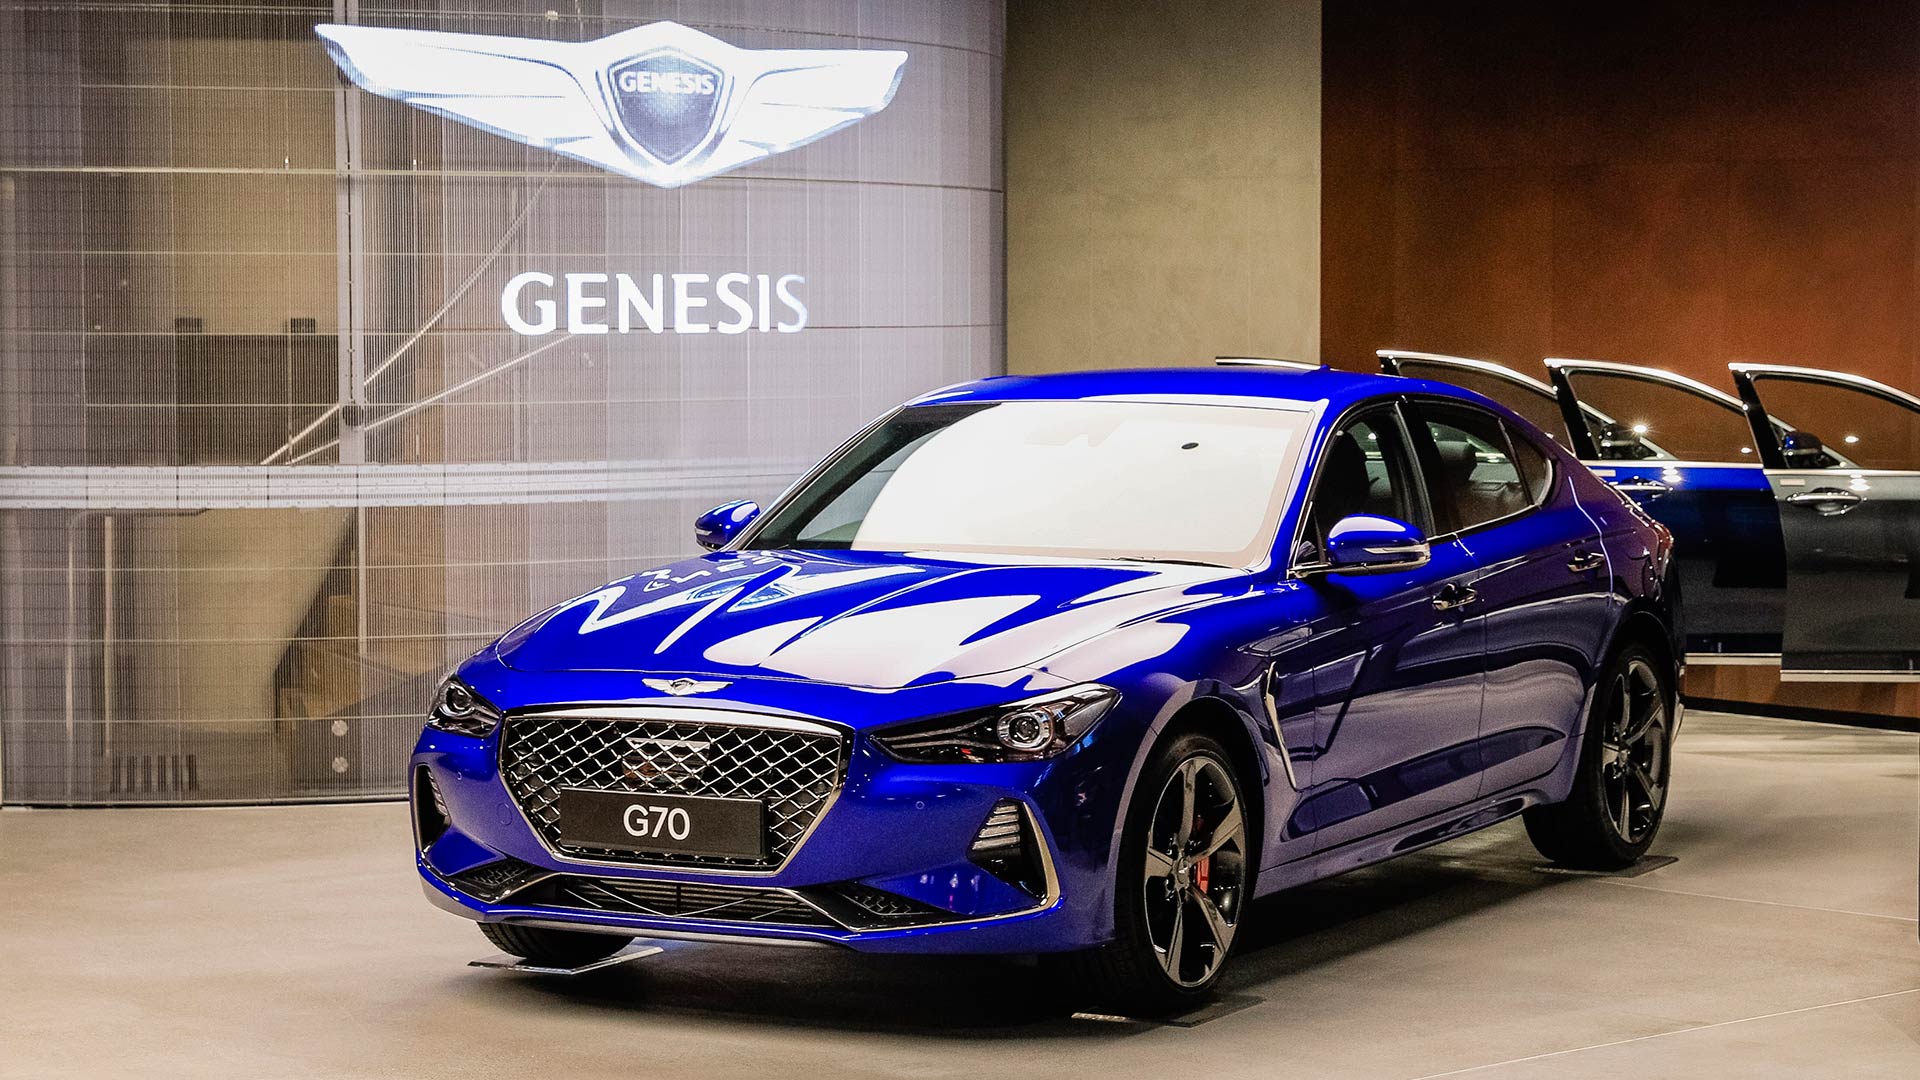 Genesis luxury brand launches in Australia